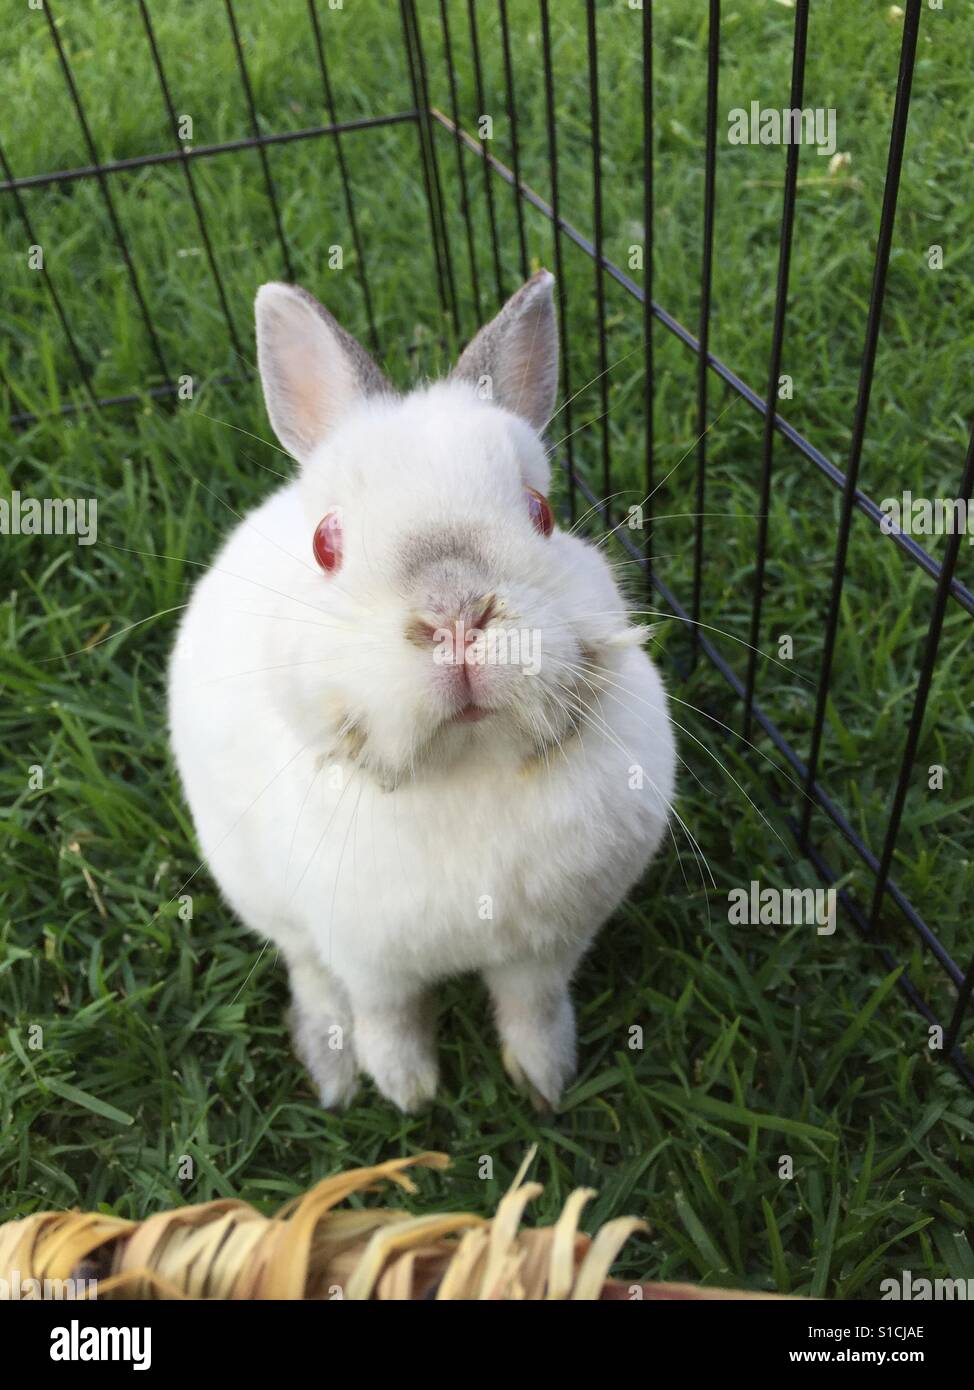 Netherland dwarf rabbit Stock Photo